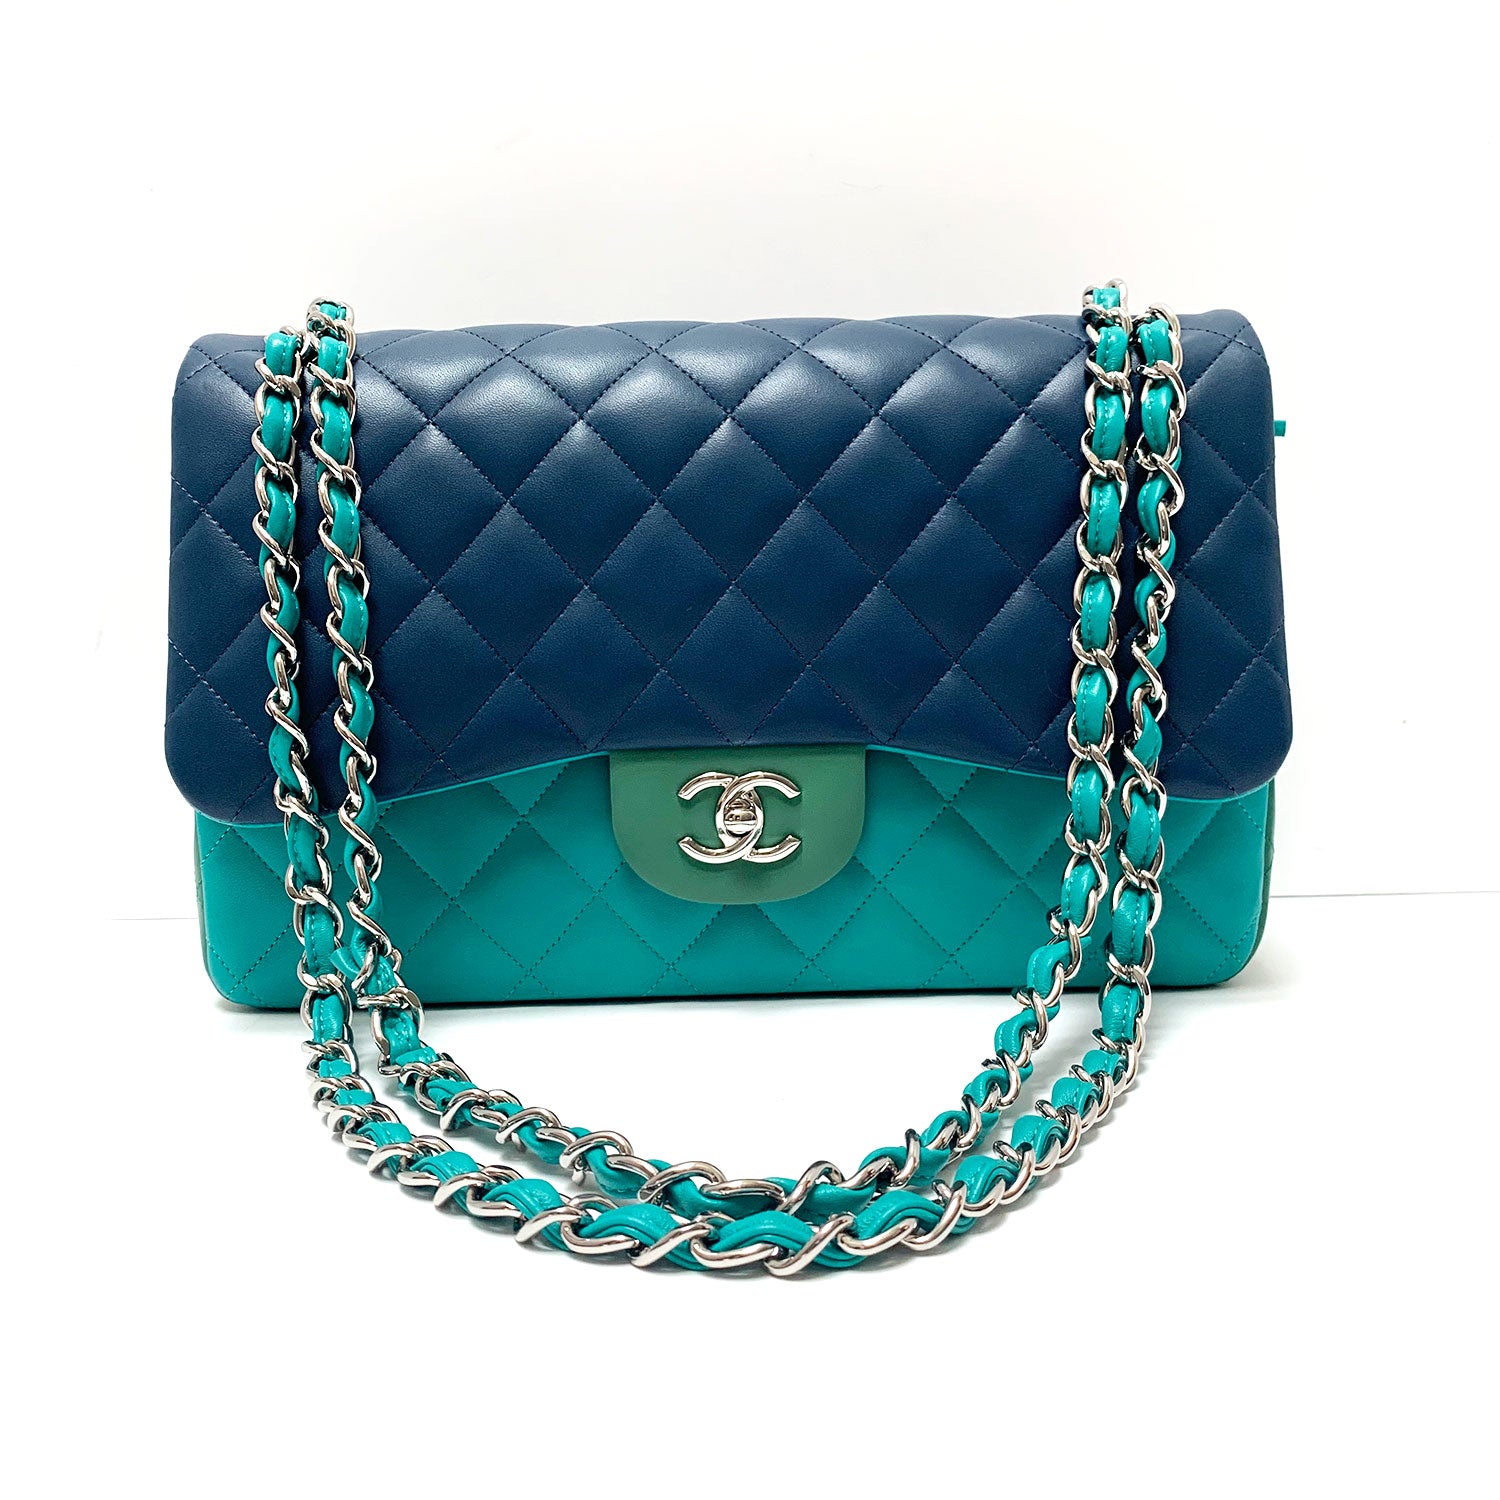 Chanel Classic Jumbo Tricolor Flap Bag